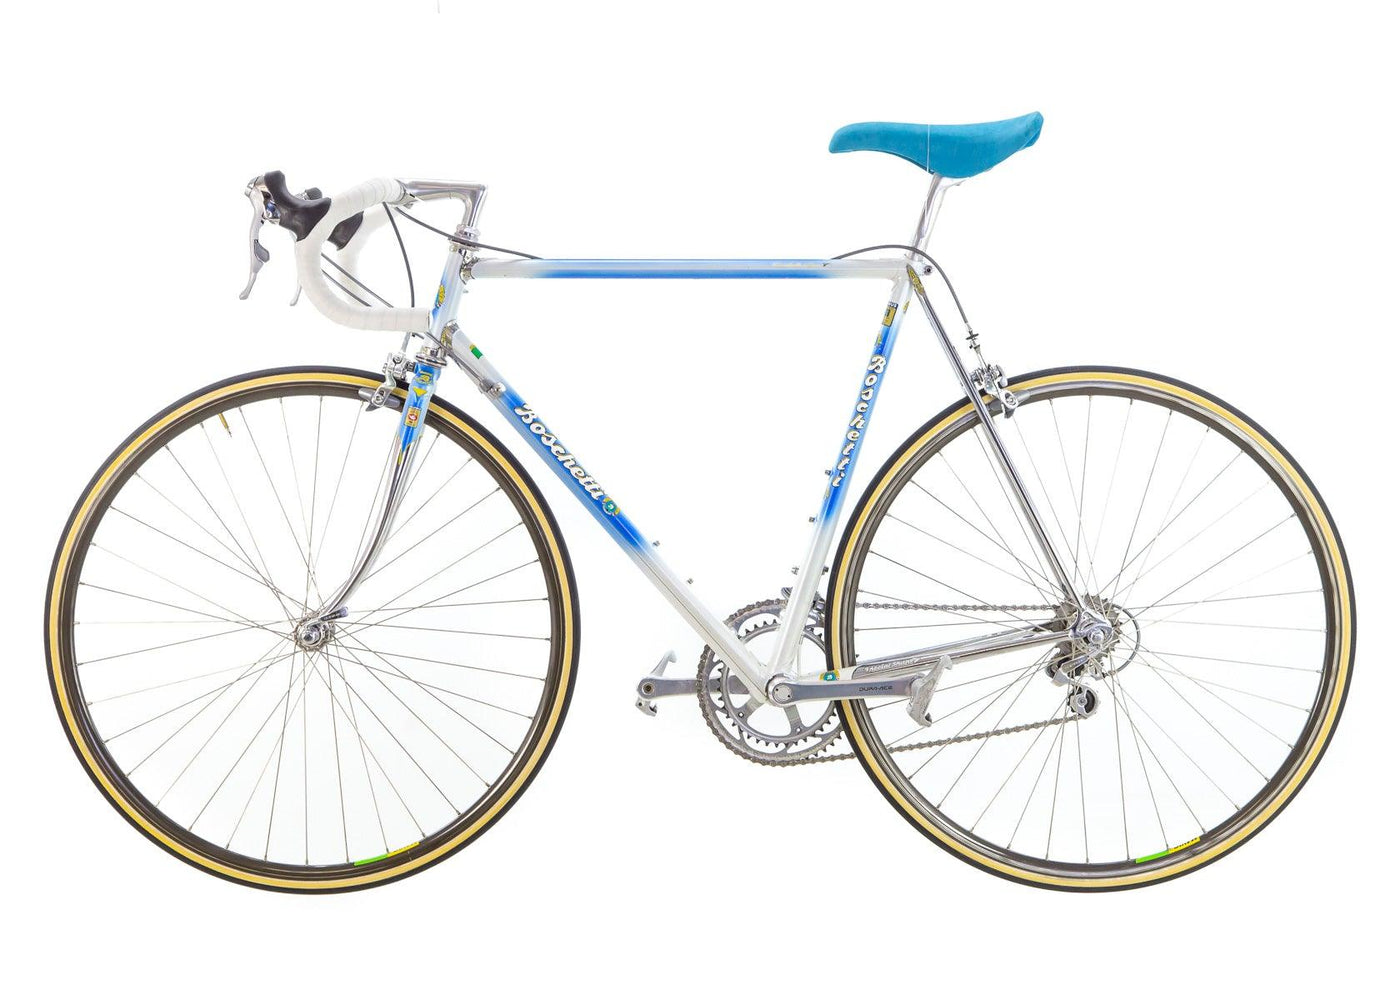 Boschetti Multishape Elaborate Road Bike 1990s - Steel Vintage Bikes